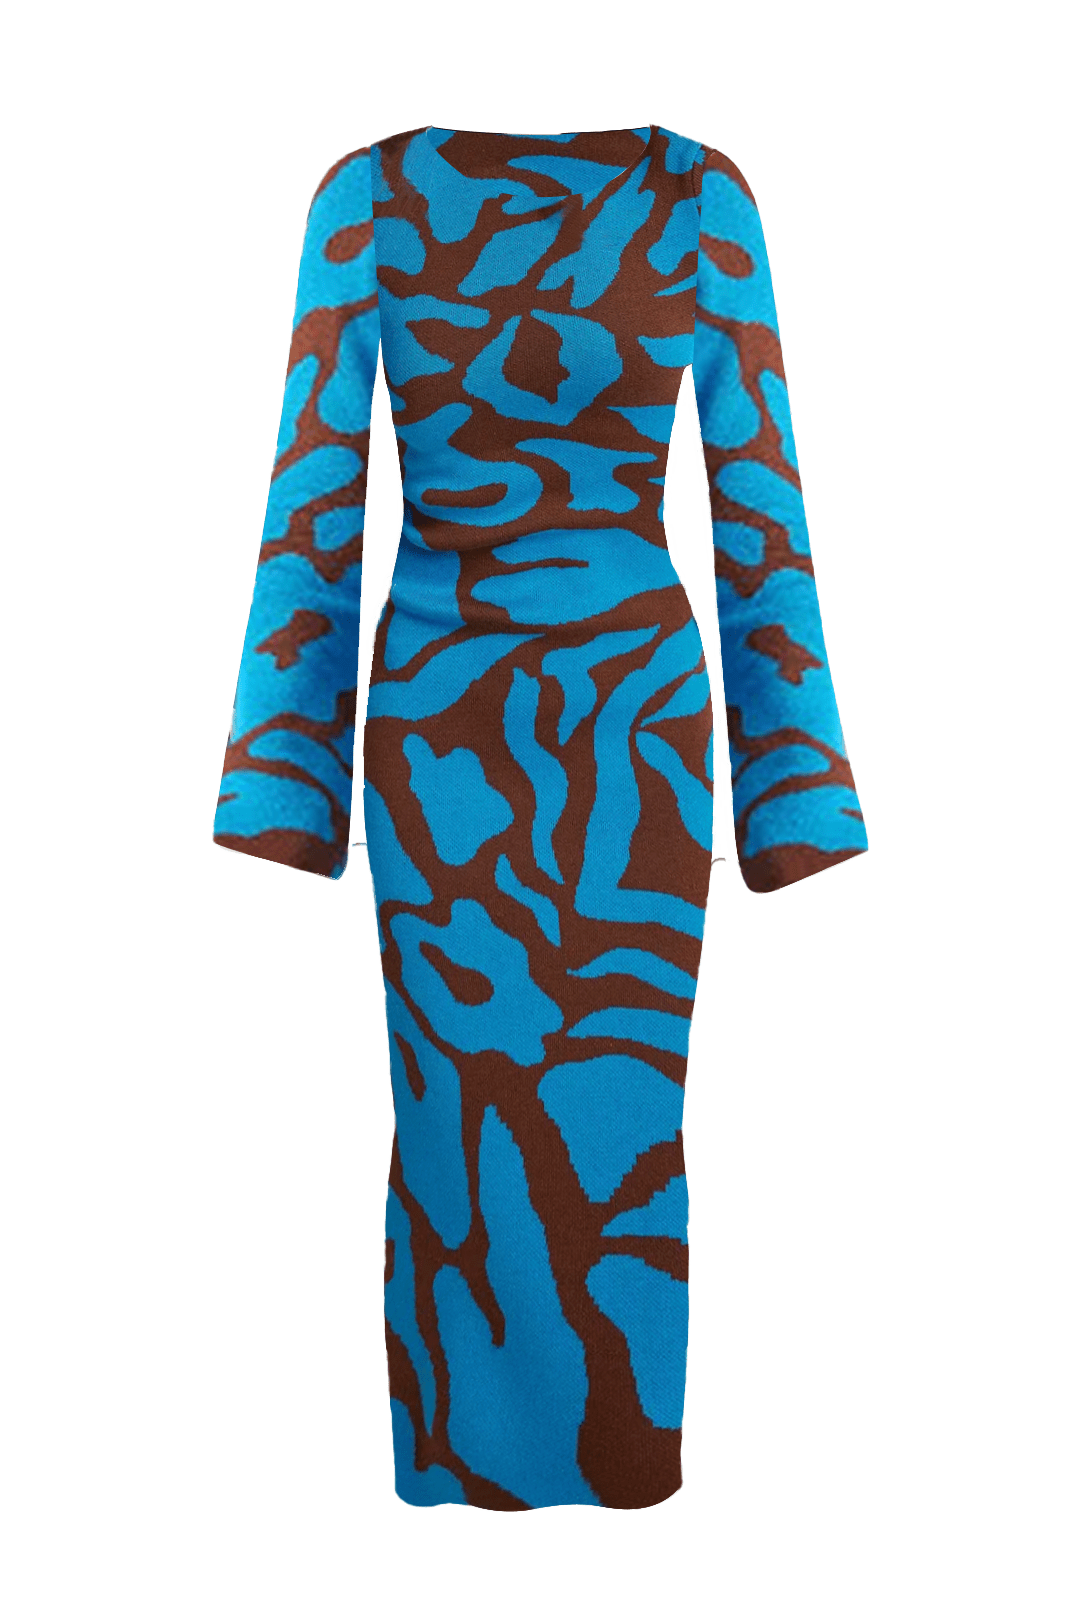 Knitted Blue Bodycon Dress - Kelly Obi New York